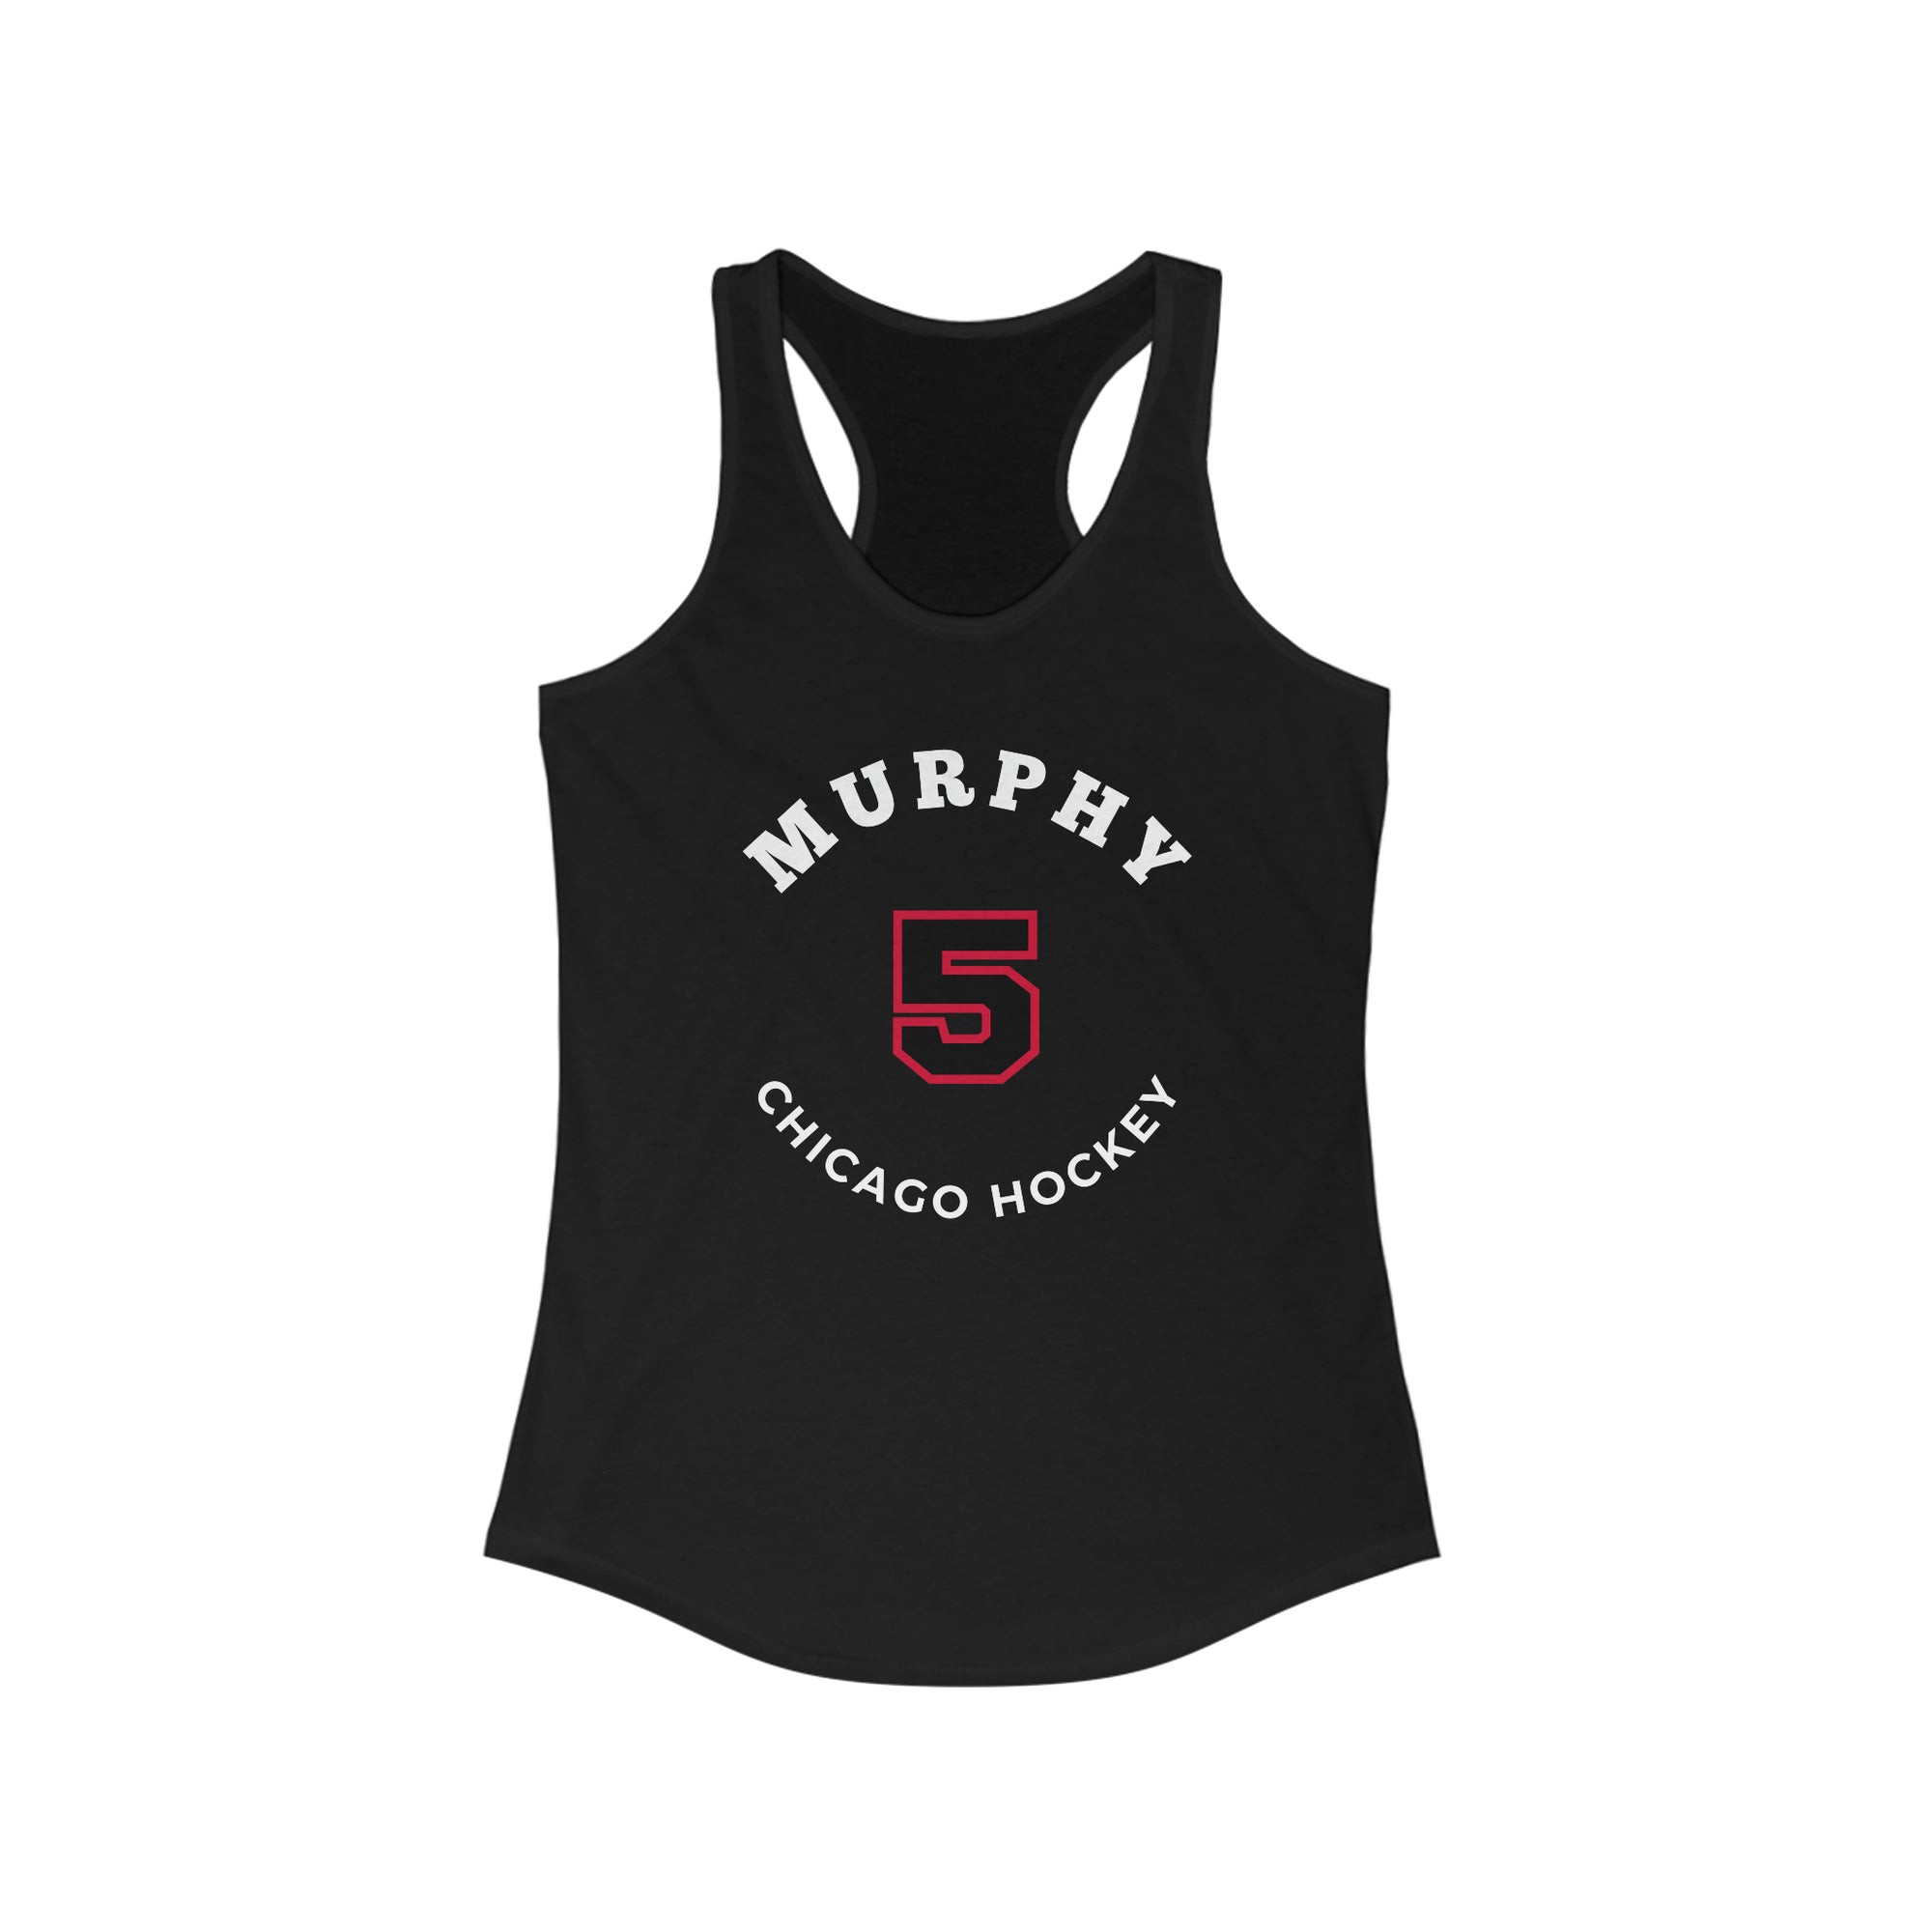 Murphy 5 Chicago Hockey Number Arch Design Women's Ideal Racerback Tank Top